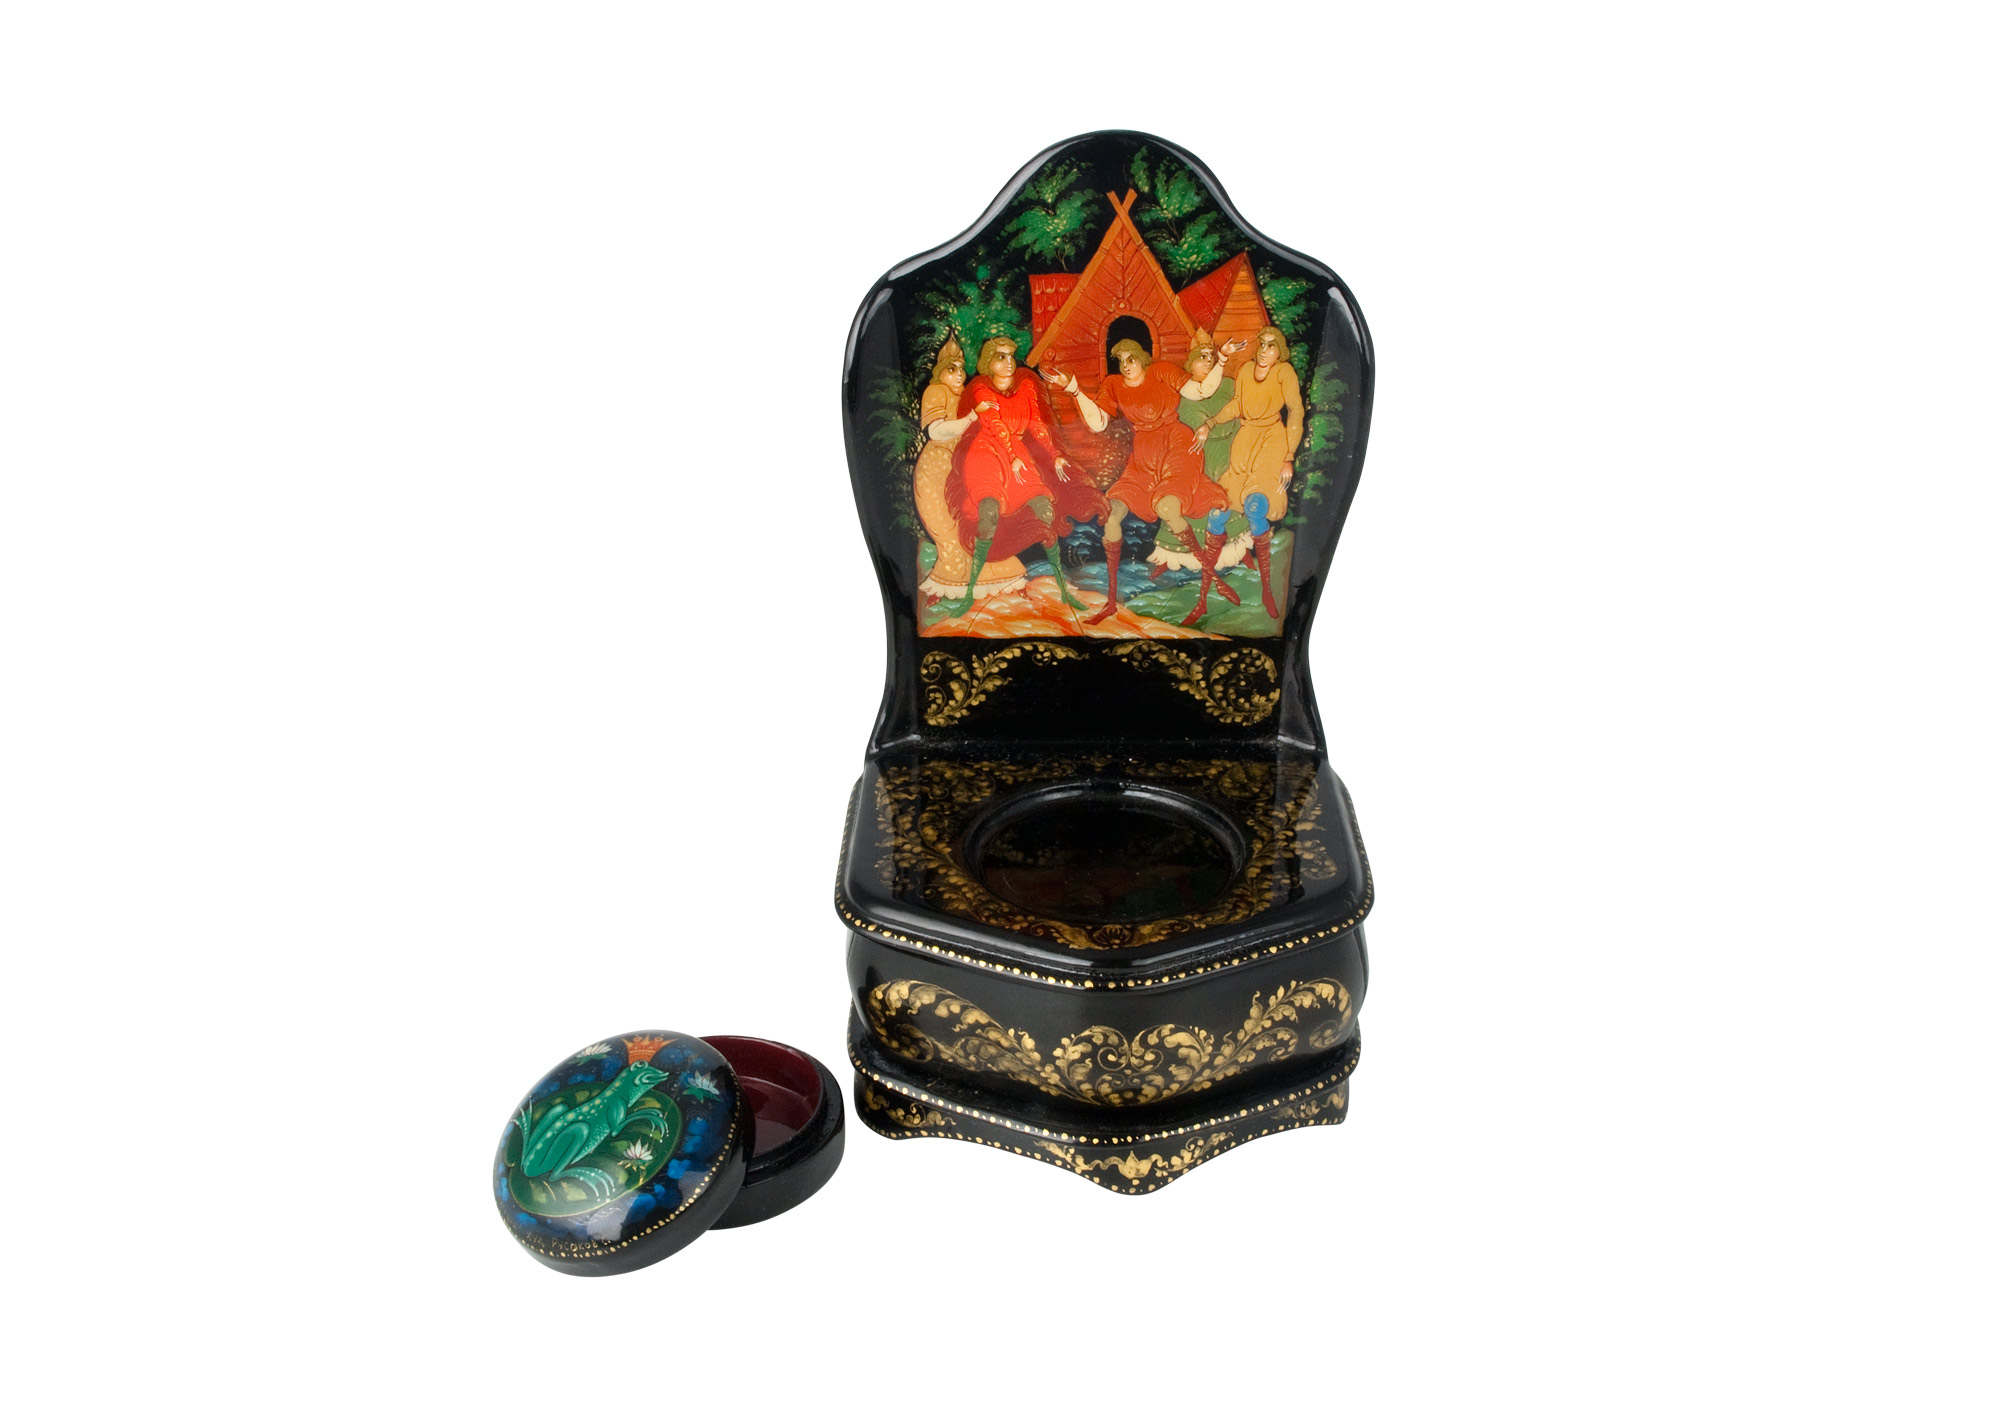 Buy Frog Princess Throne Lacquer Box at GoldenCockerel.com